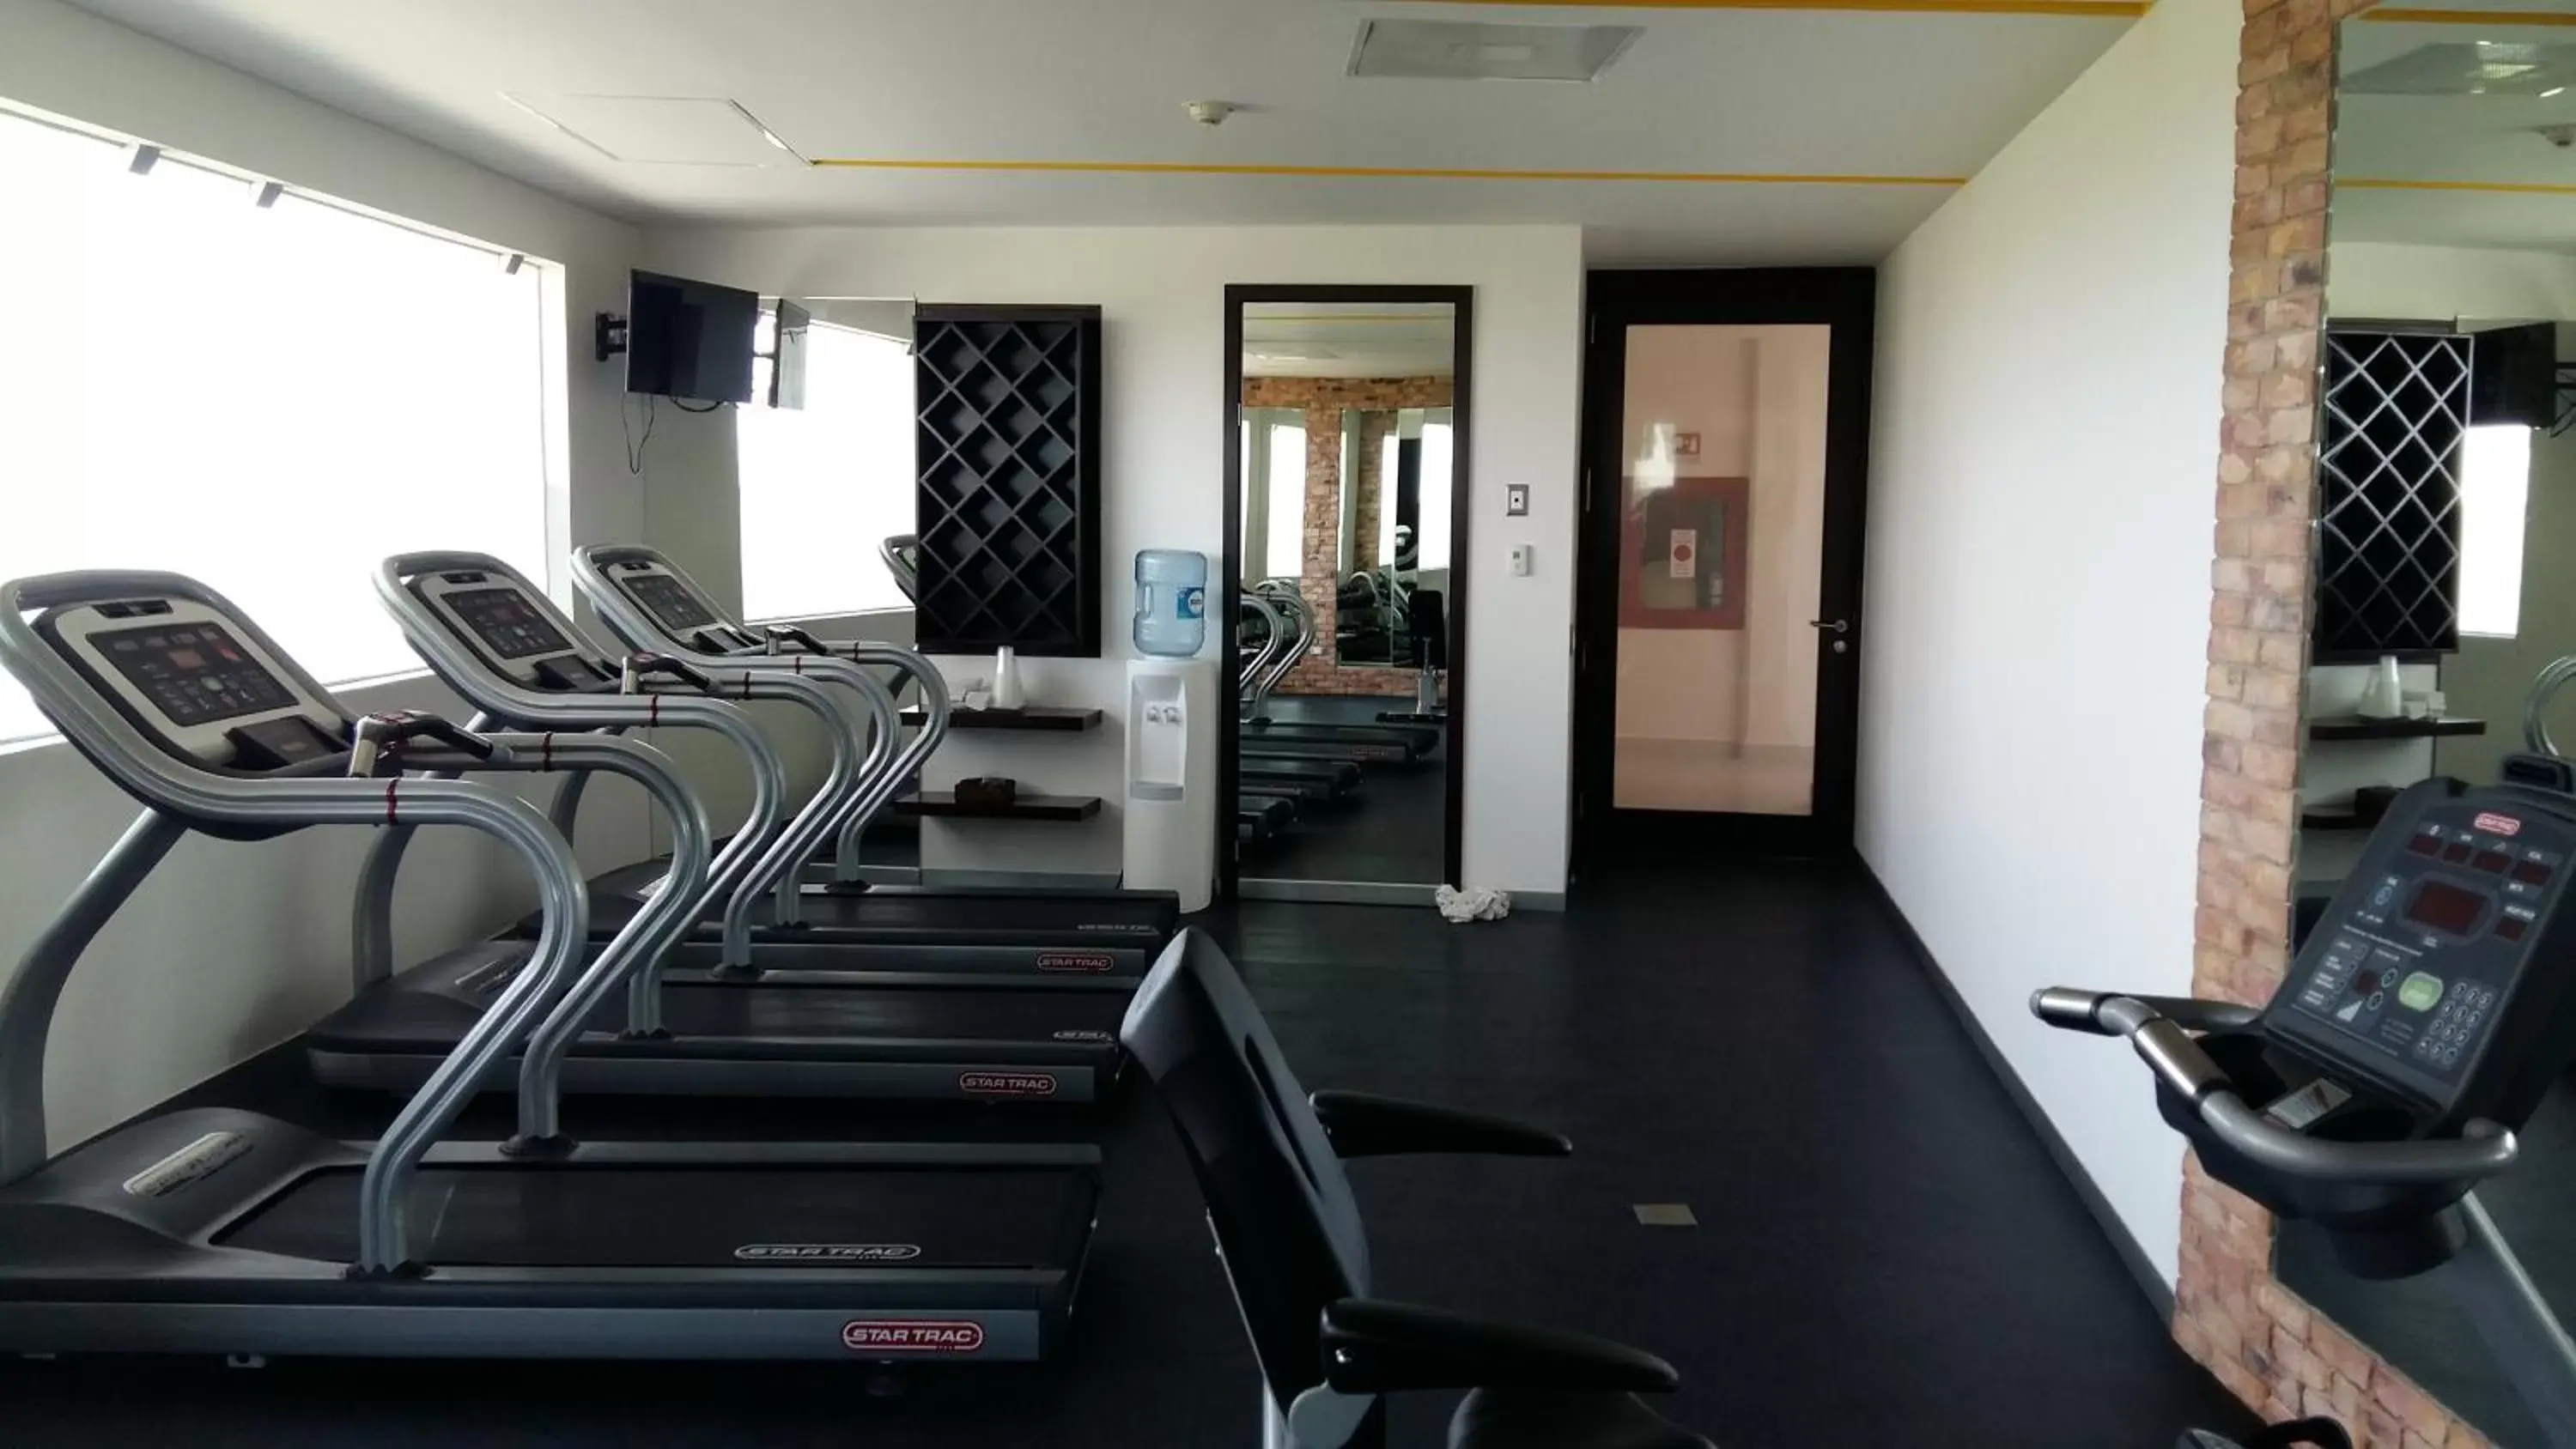 Fitness centre/facilities, Fitness Center/Facilities in Krystal Urban Cancun & Beach Club